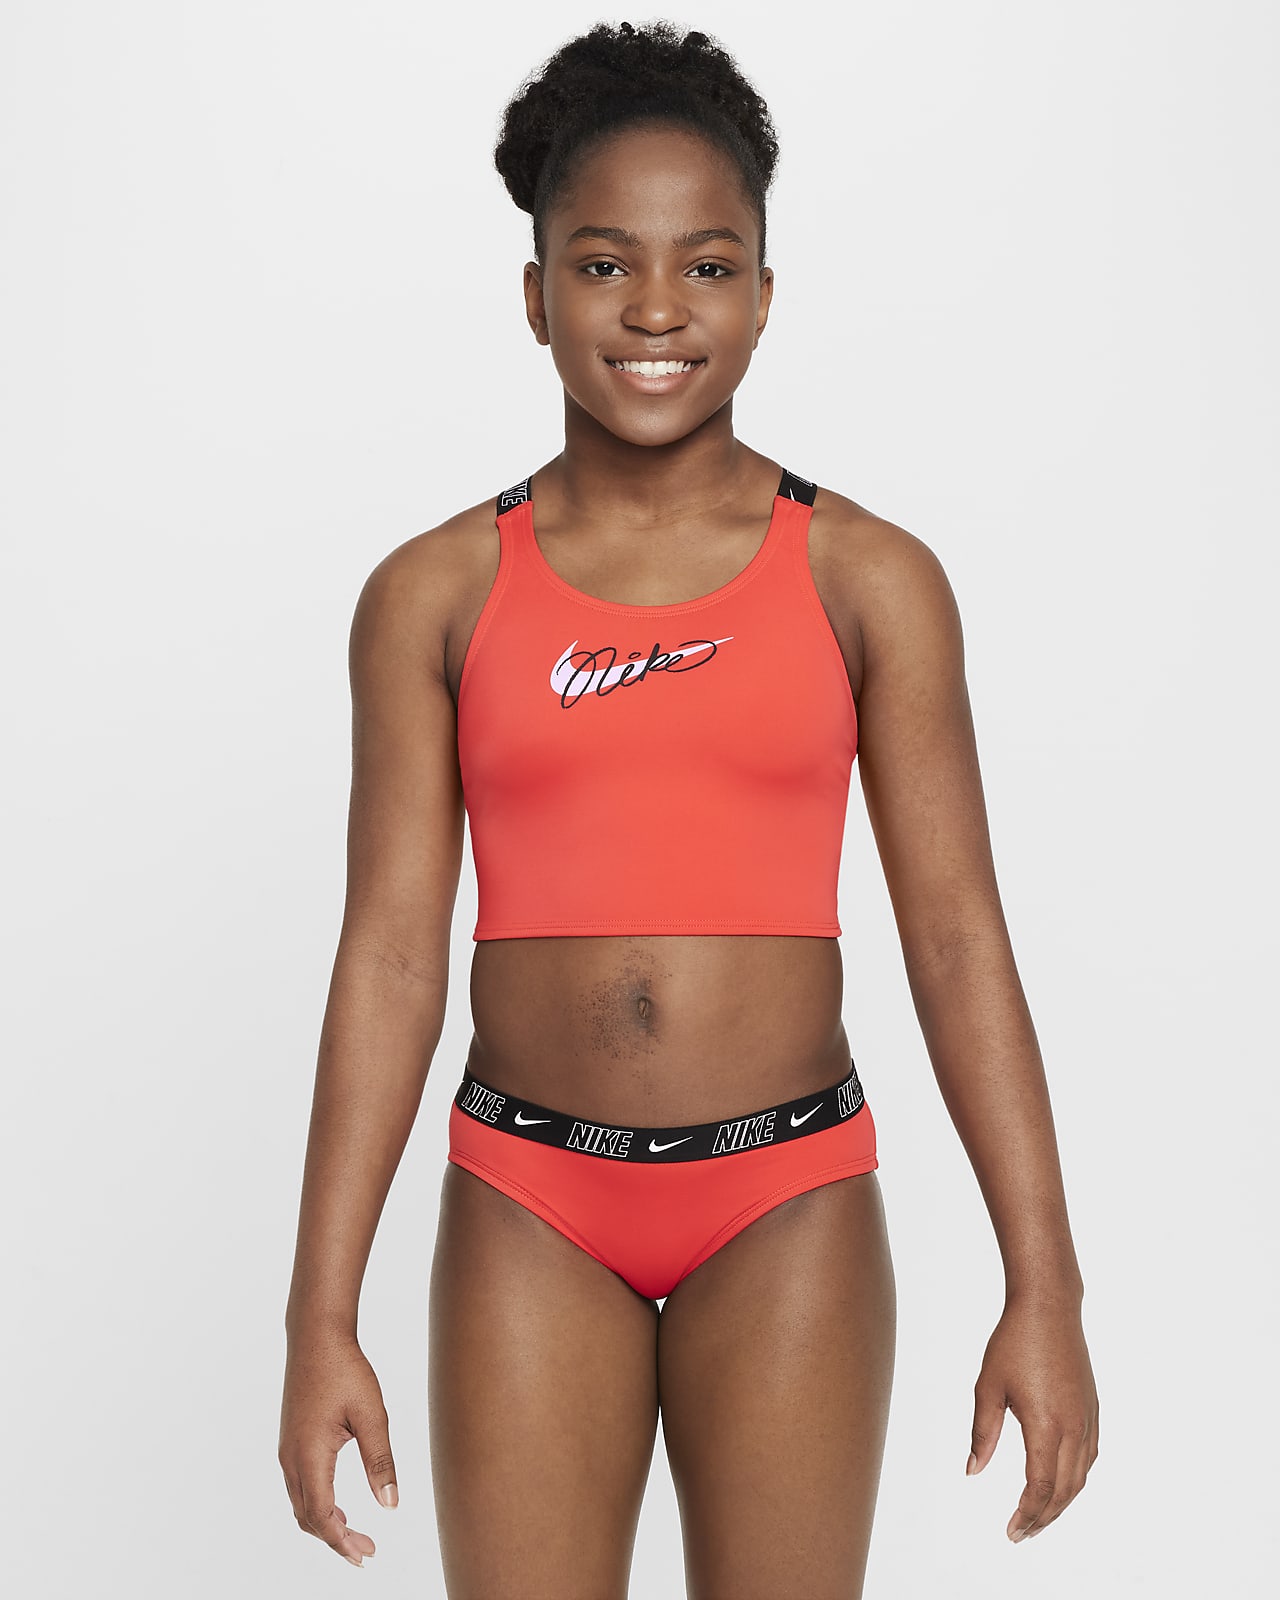 Midkini-set Nike Swim med korslagda ryggband för ungdom (tjejer)